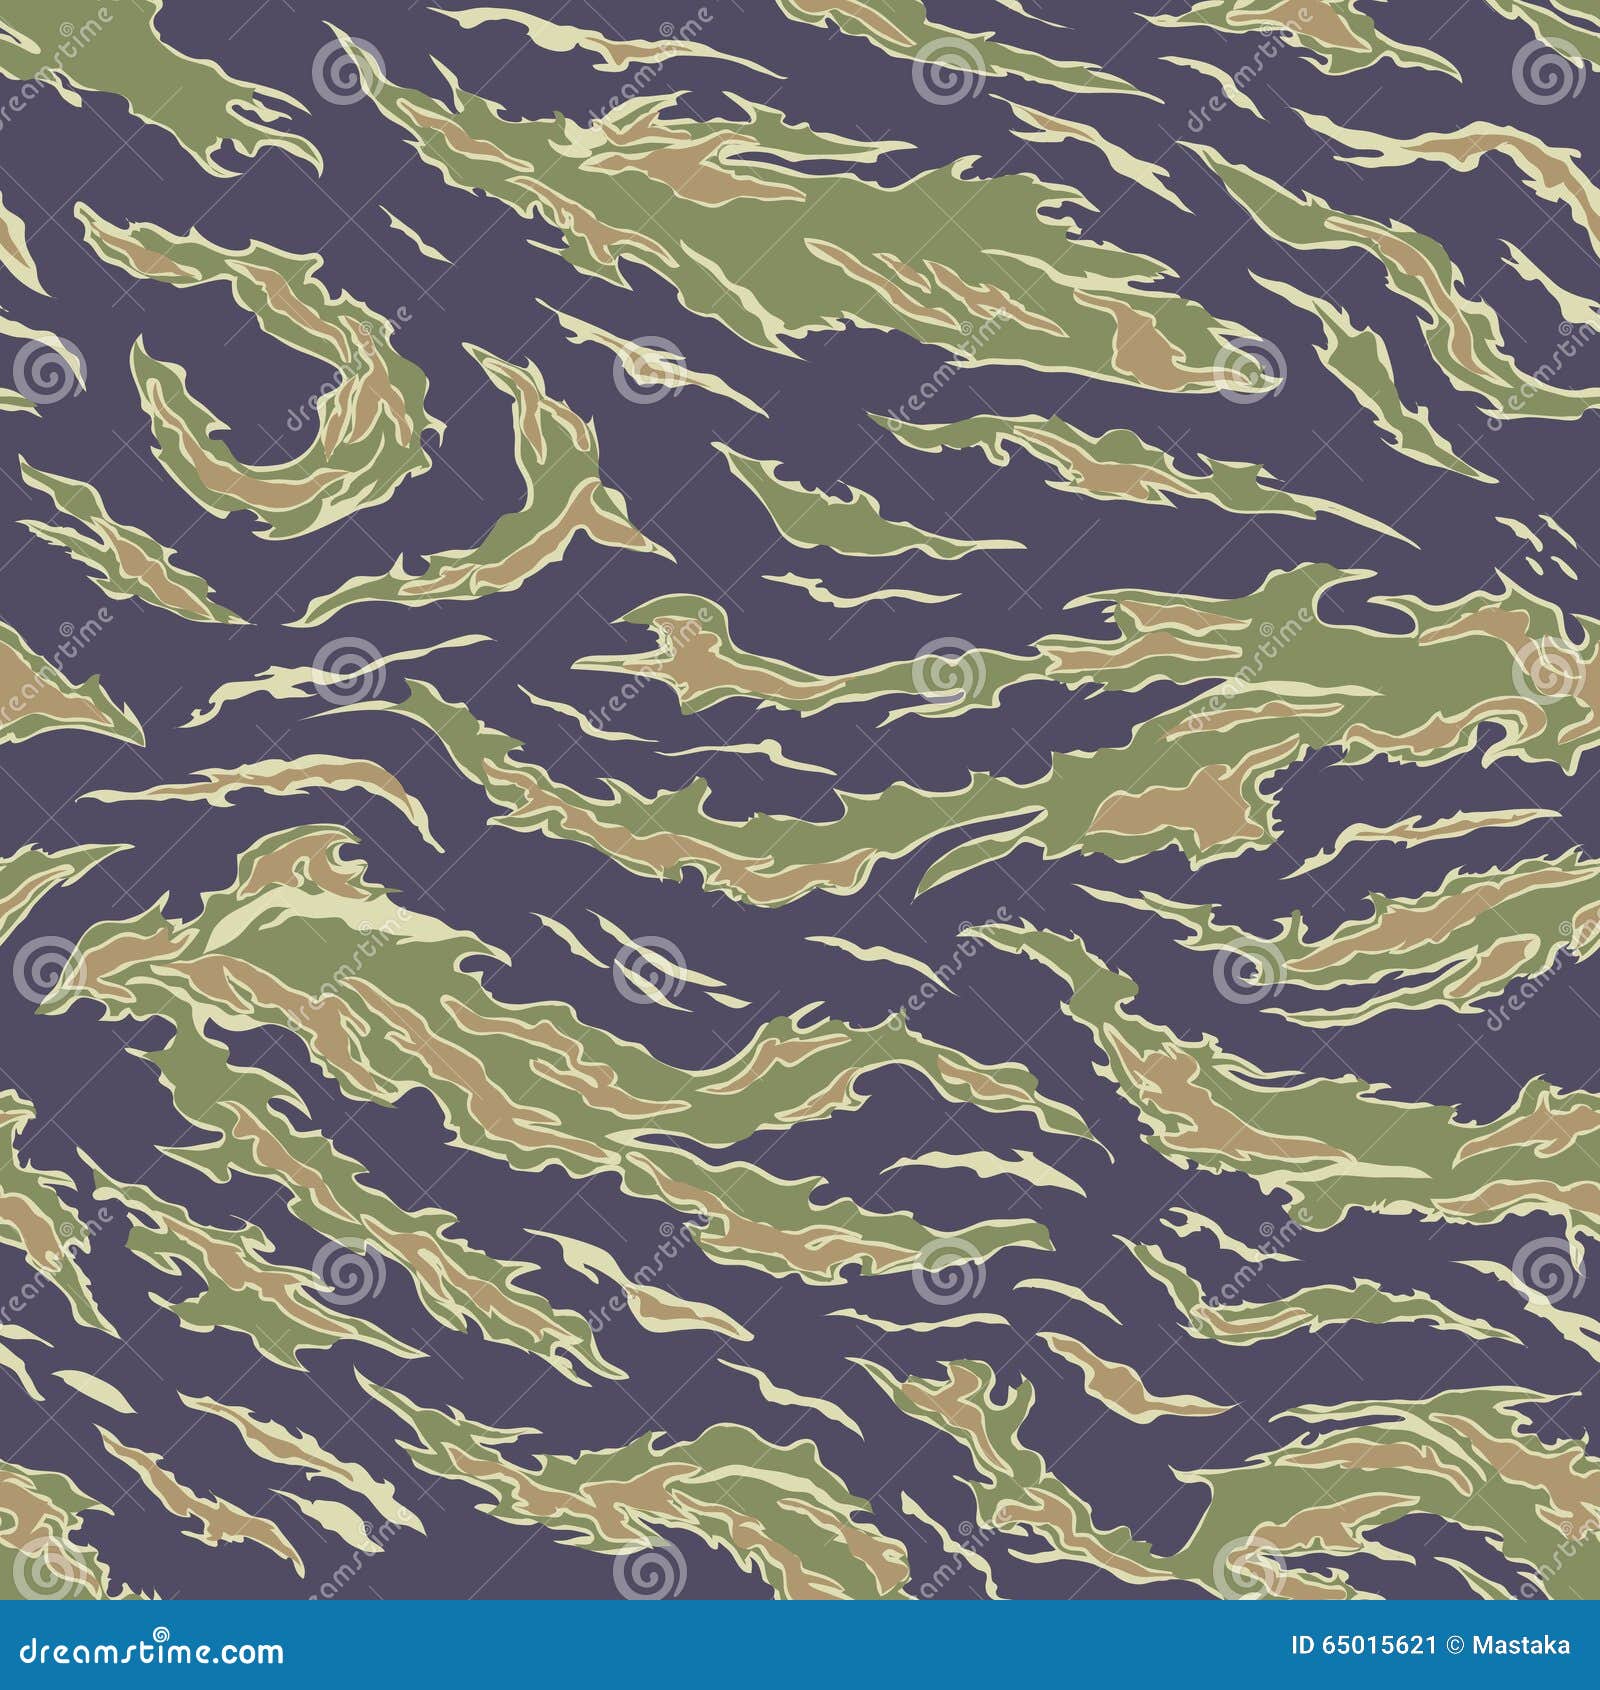 Vietnam Tiger Stripe Camouflage Seamless Patterns Vector Illustration